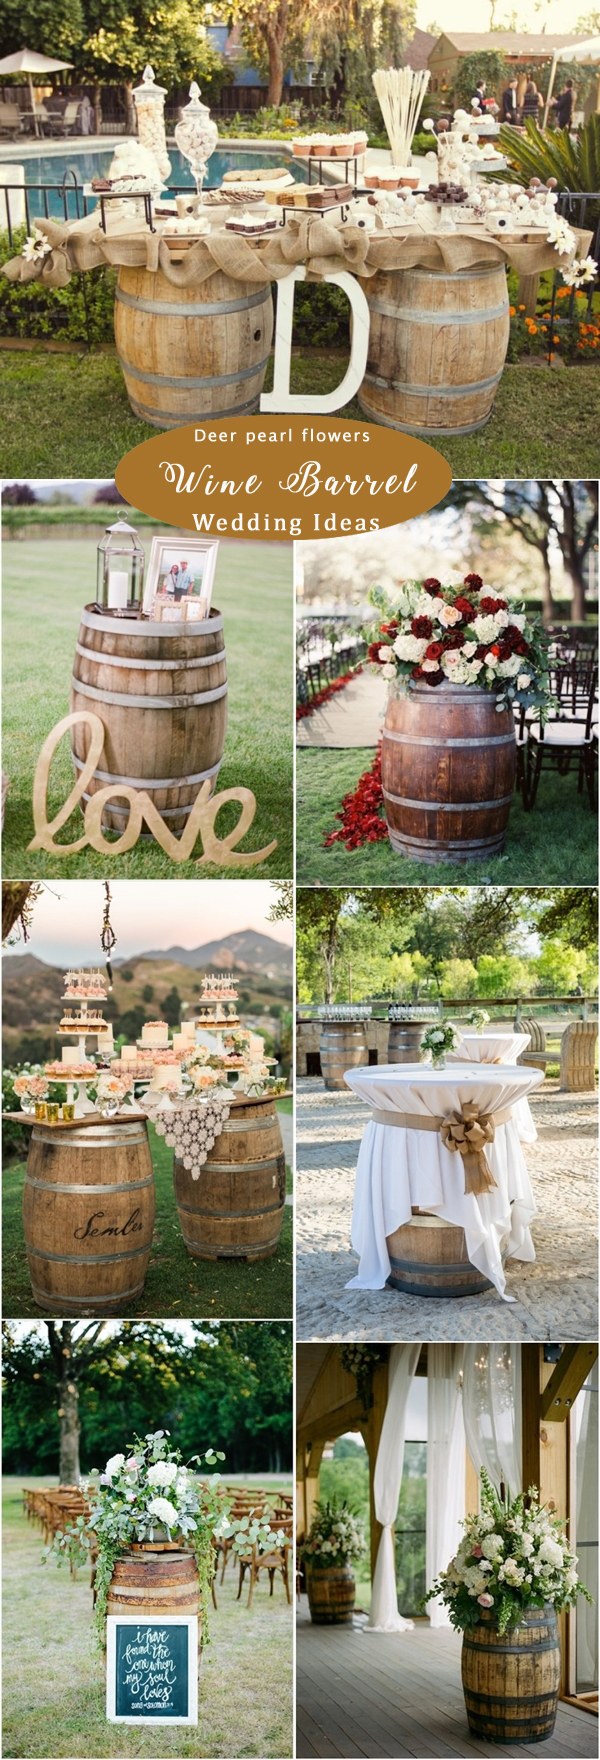 Rustic wine barrel wedding ideas